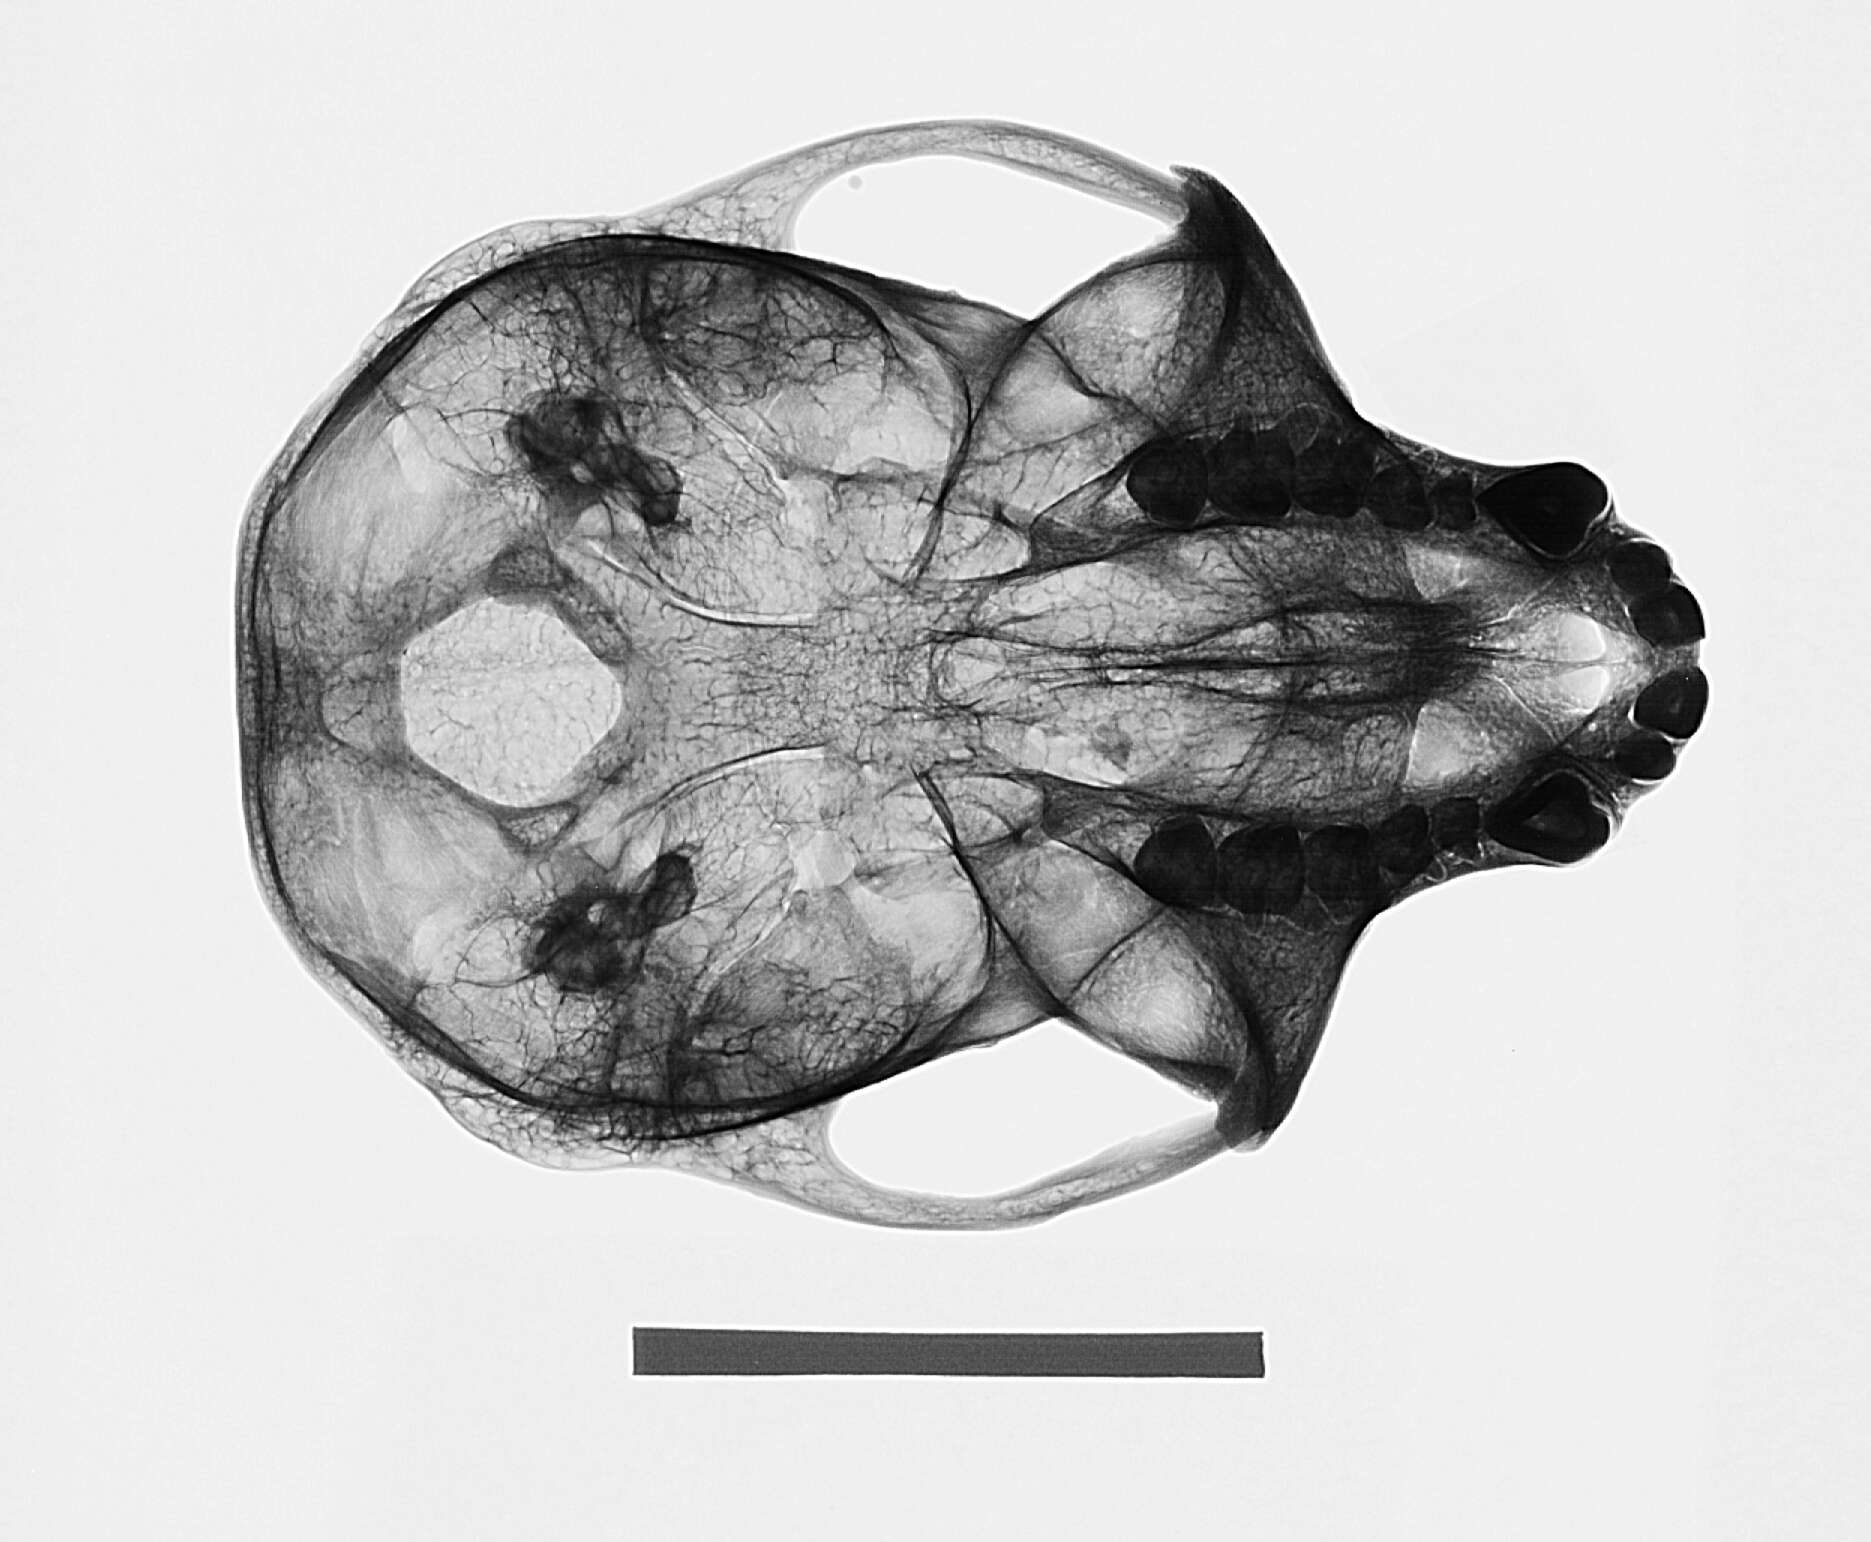 Image de Chlorocebus pygerythrus hilgerti (Neumann 1902)